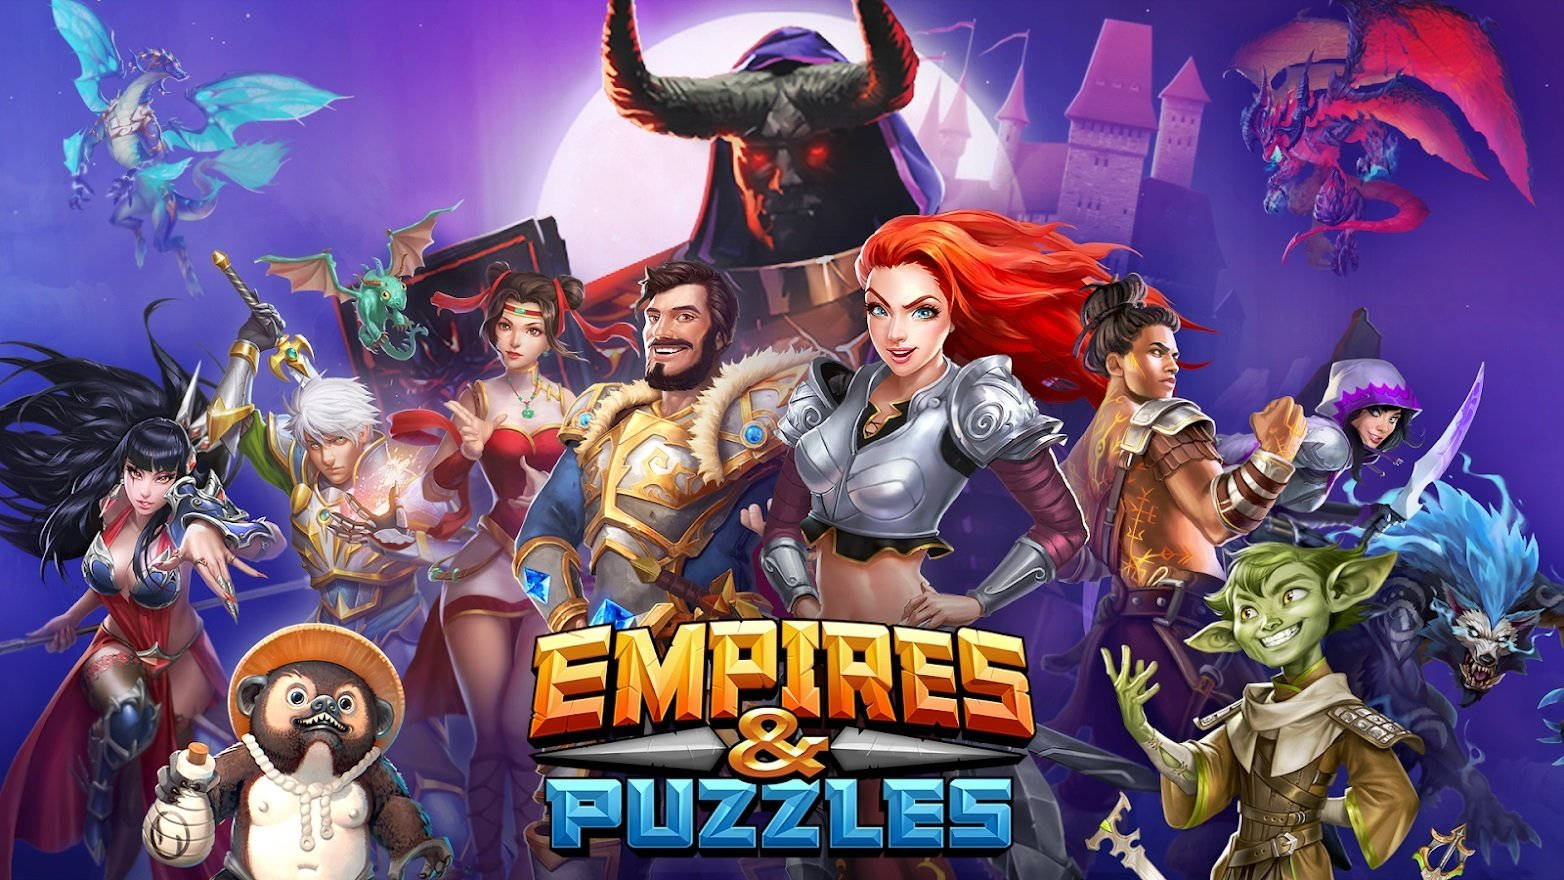 Empires & Puzzles Game Picture